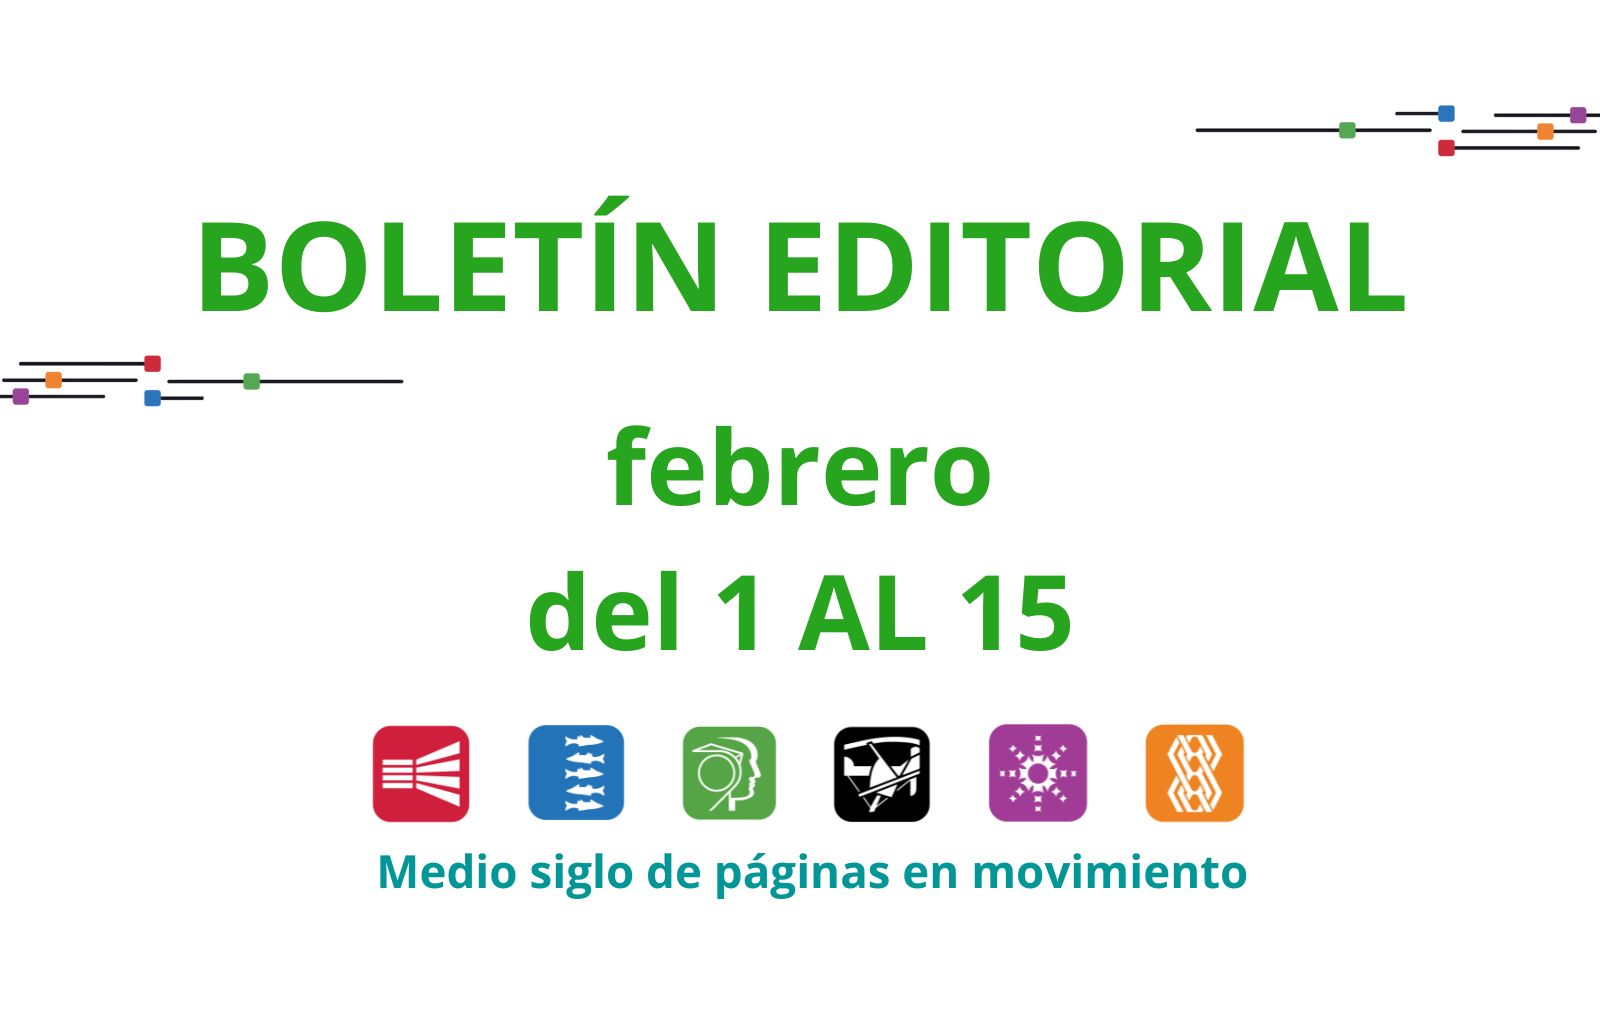 Boletín editorial LibrosUAM, núm. 13